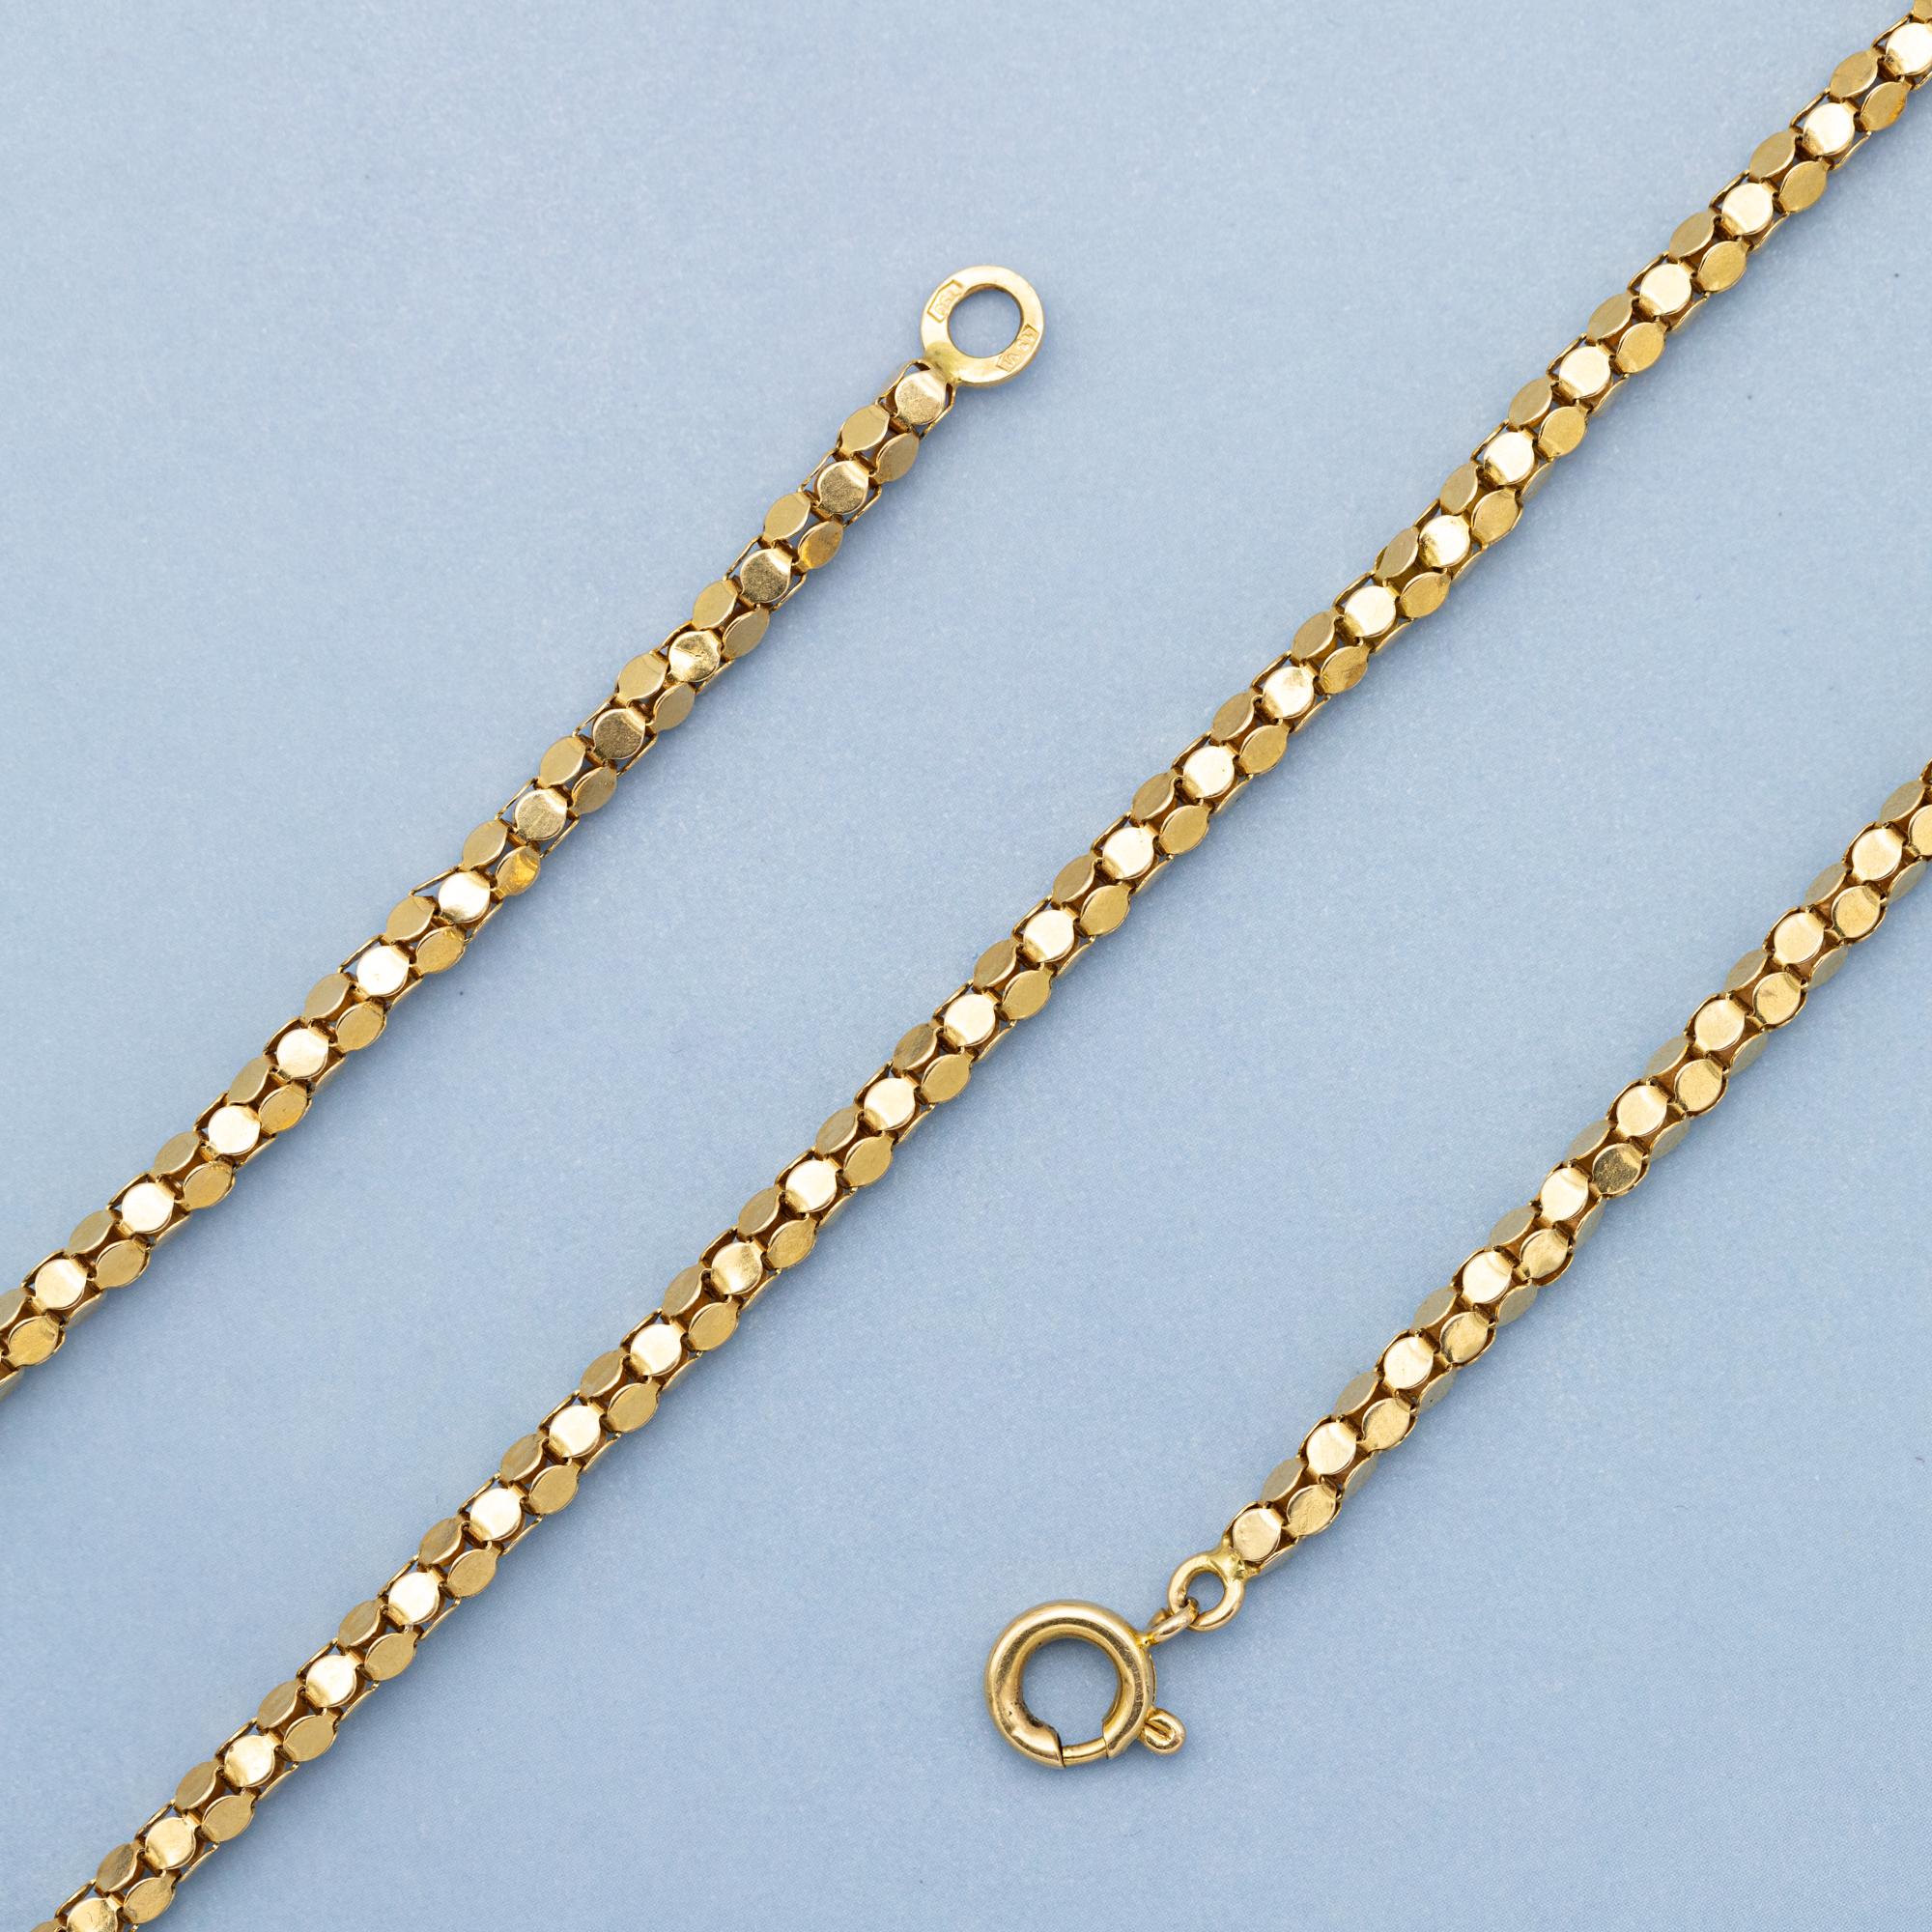 Women's or Men's 18k solid gold Retro popcorn chain - 1960's necklace - 44.5 cm - 17.25 inch